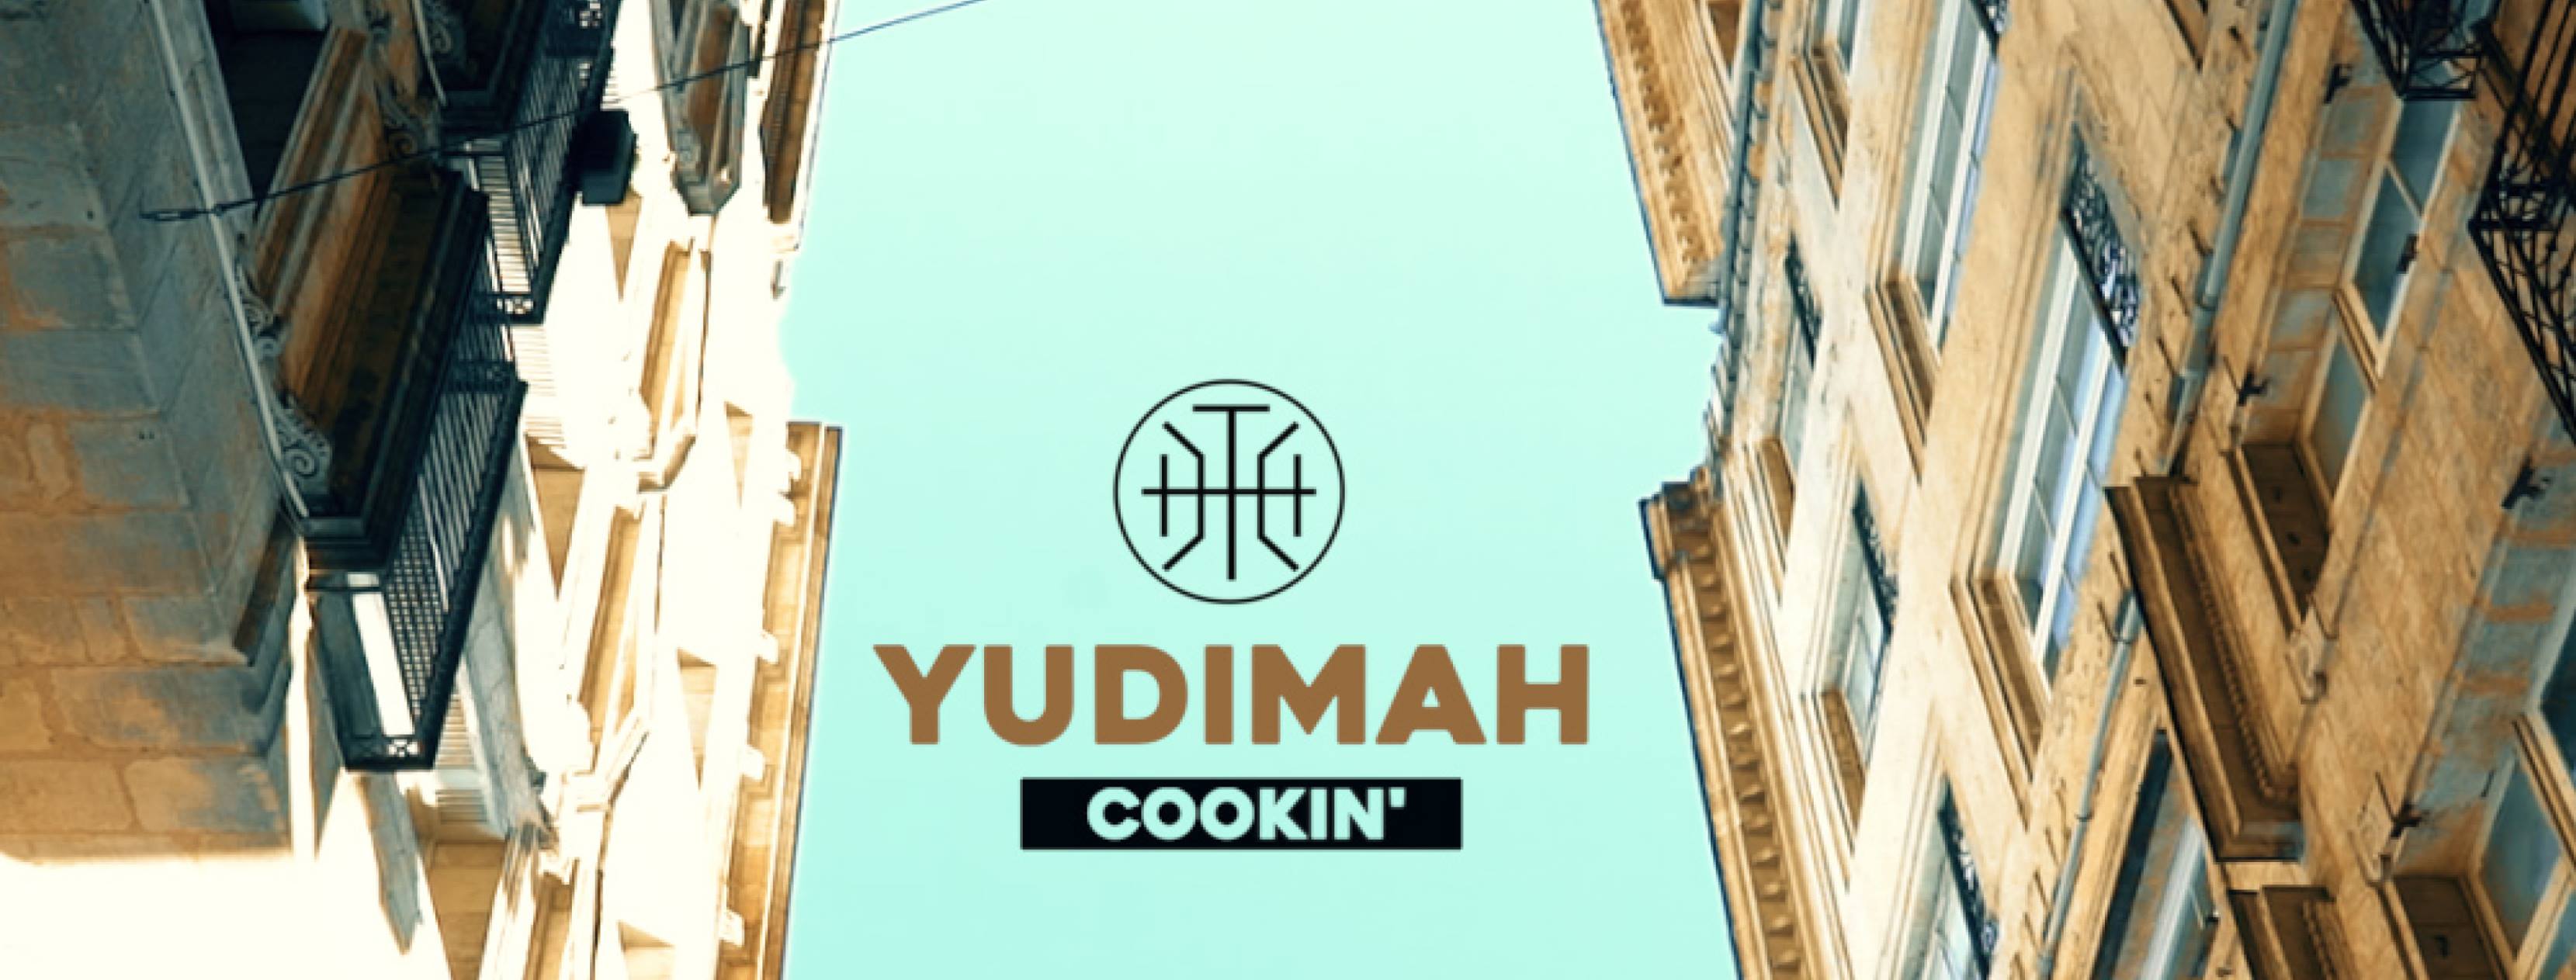 Yudimah - Cookin' (bannière)